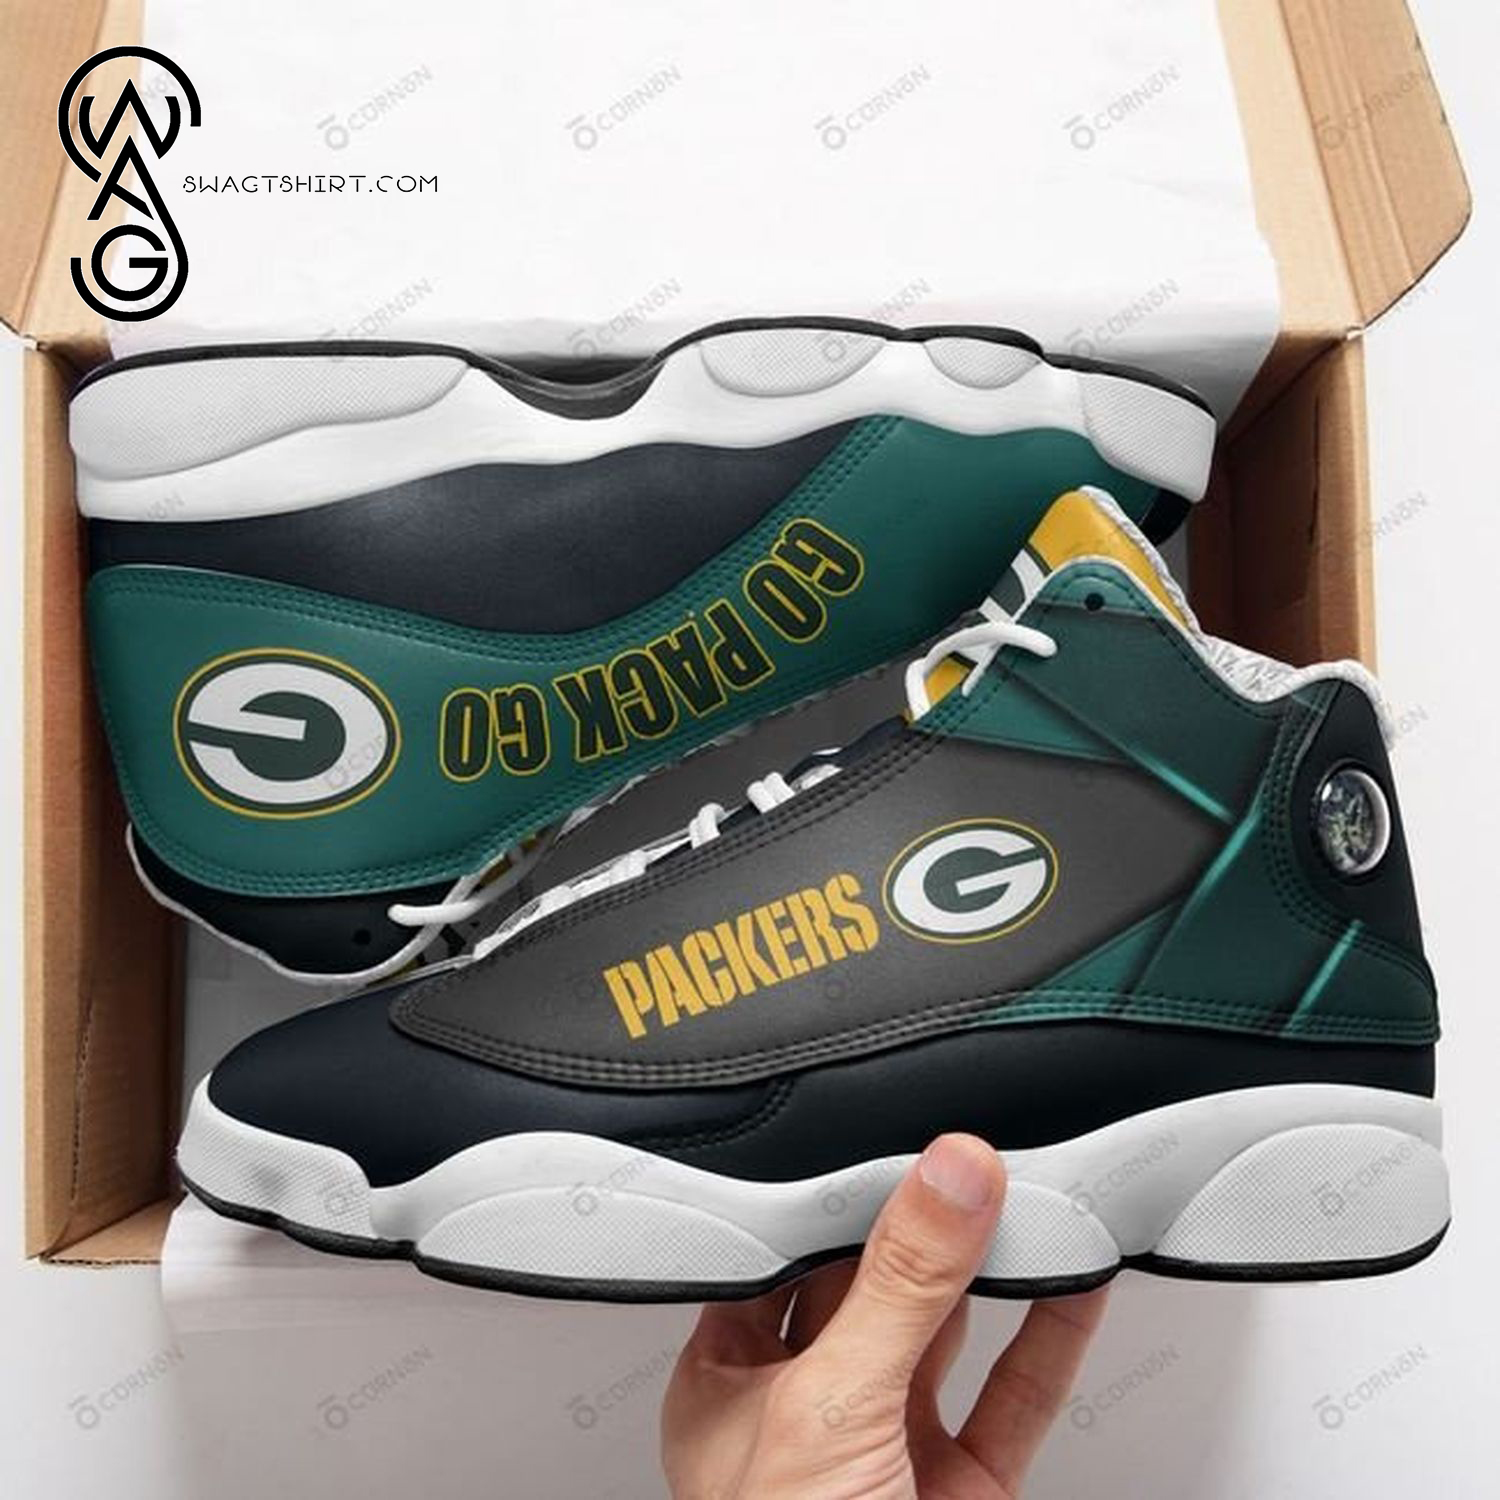 Green Bay Packers Go Pack Go Air Jordan 13 Shoes